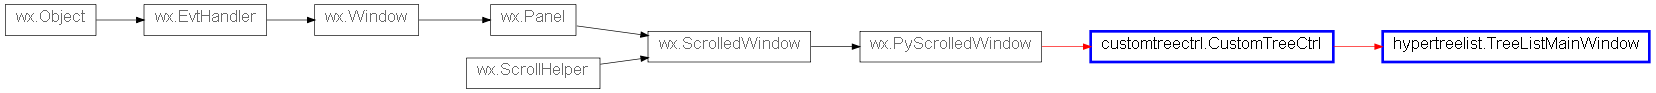 Inheritance diagram of TreeListMainWindow